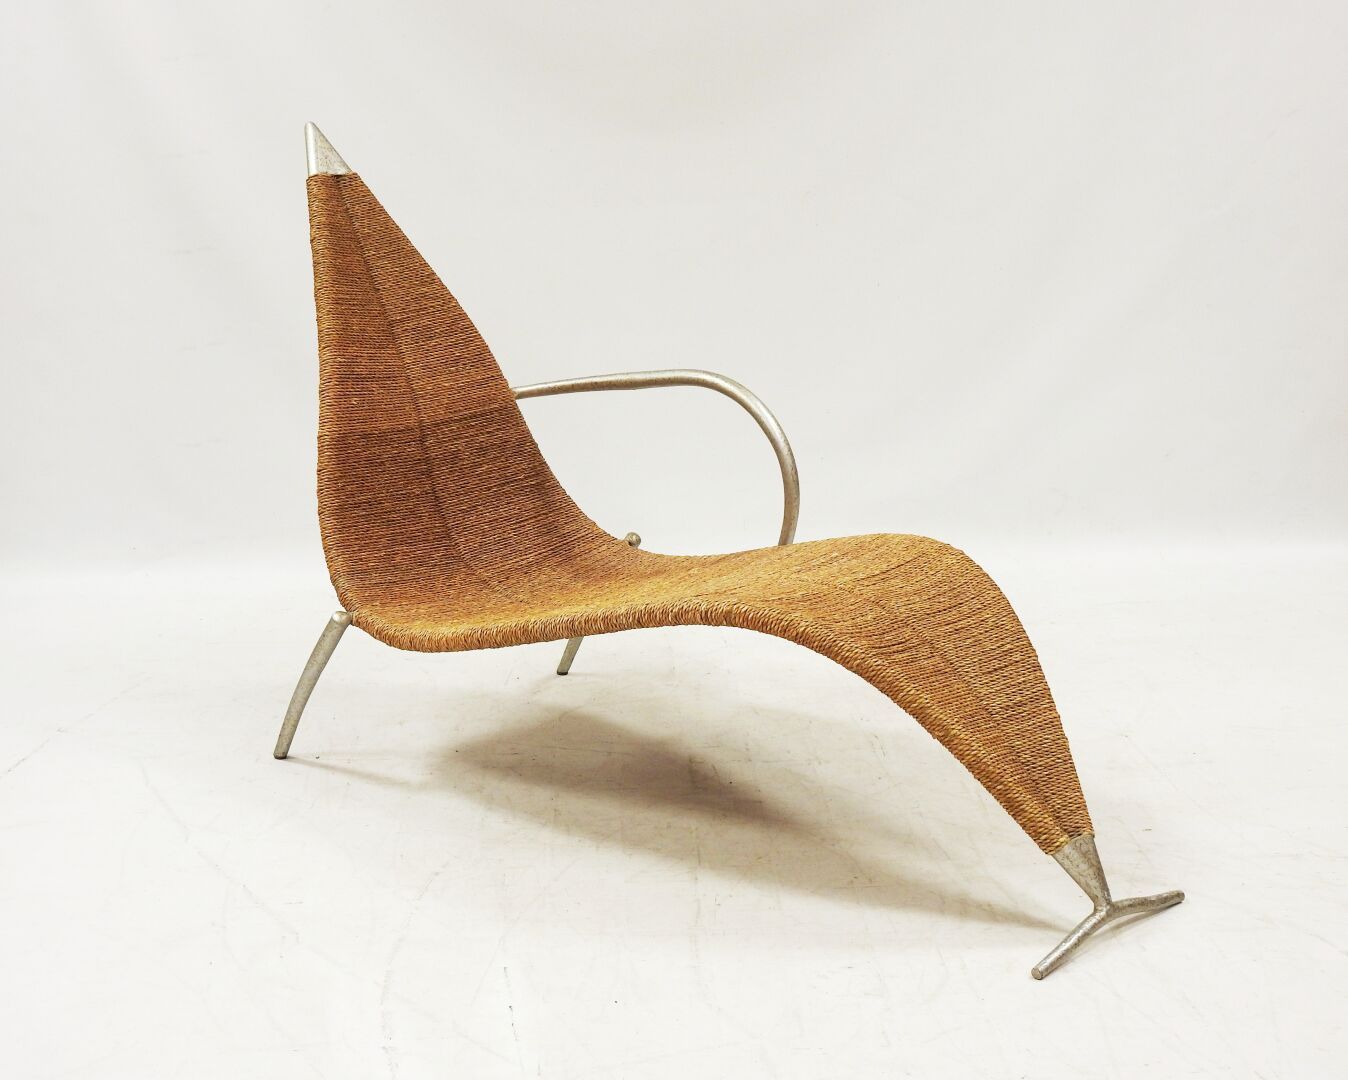 Null 卡佩里尼（CAPELLINI）风格 
带绳索座椅的建筑金属贵妃椅。
95 x 145 x 56.5 厘米。
磨损严重。